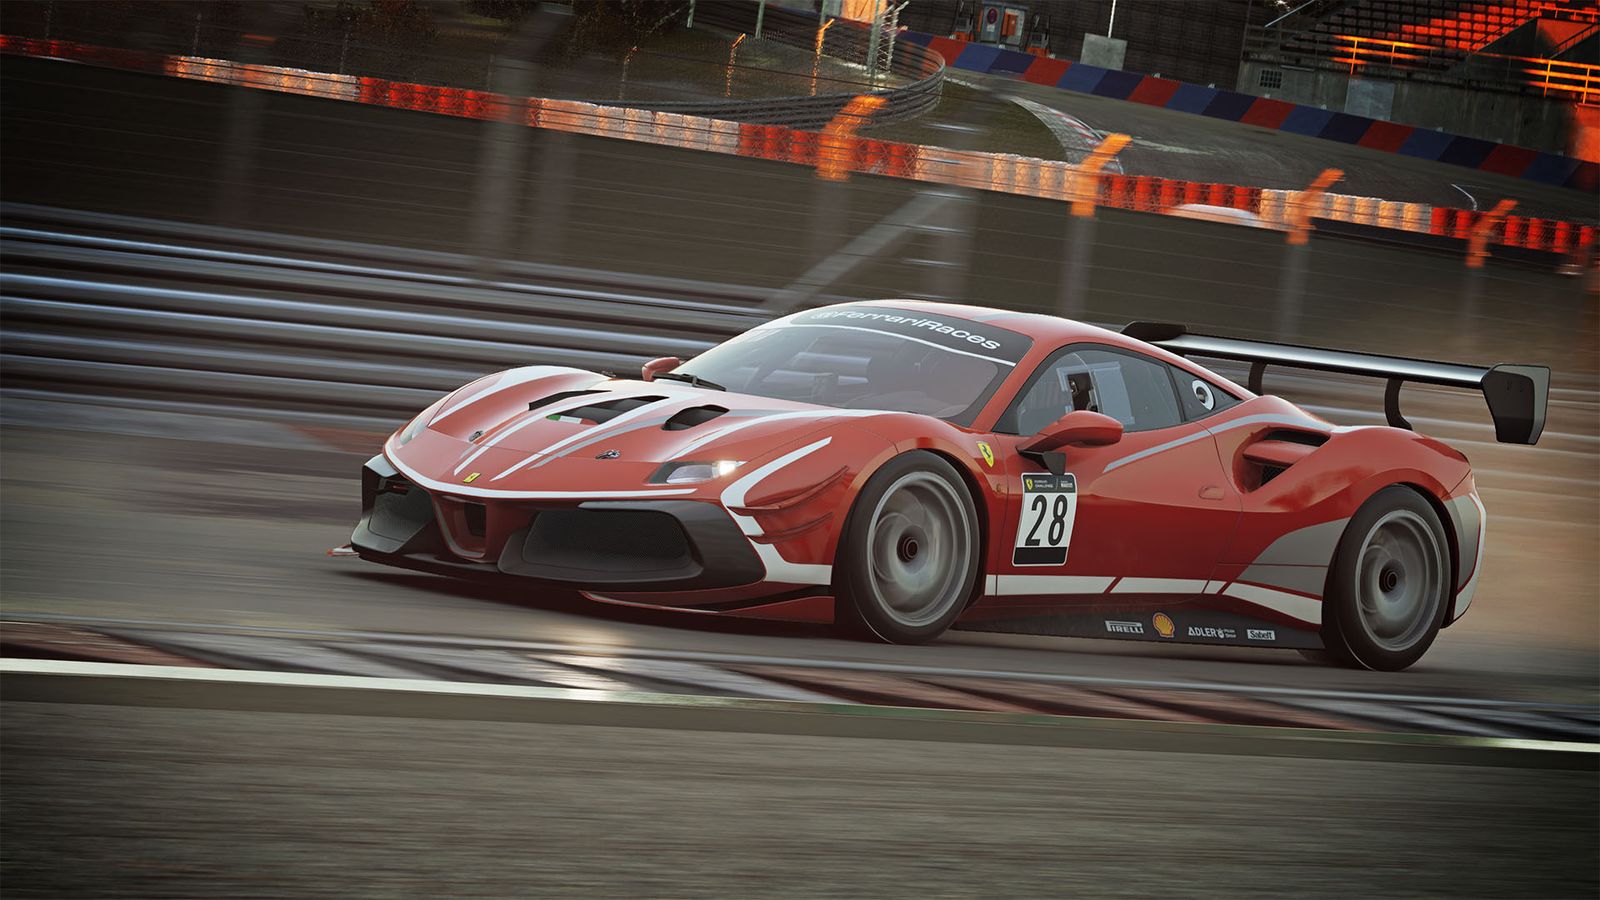 Assetto Corsa Competizione console v1.8.9.1 update patch notes